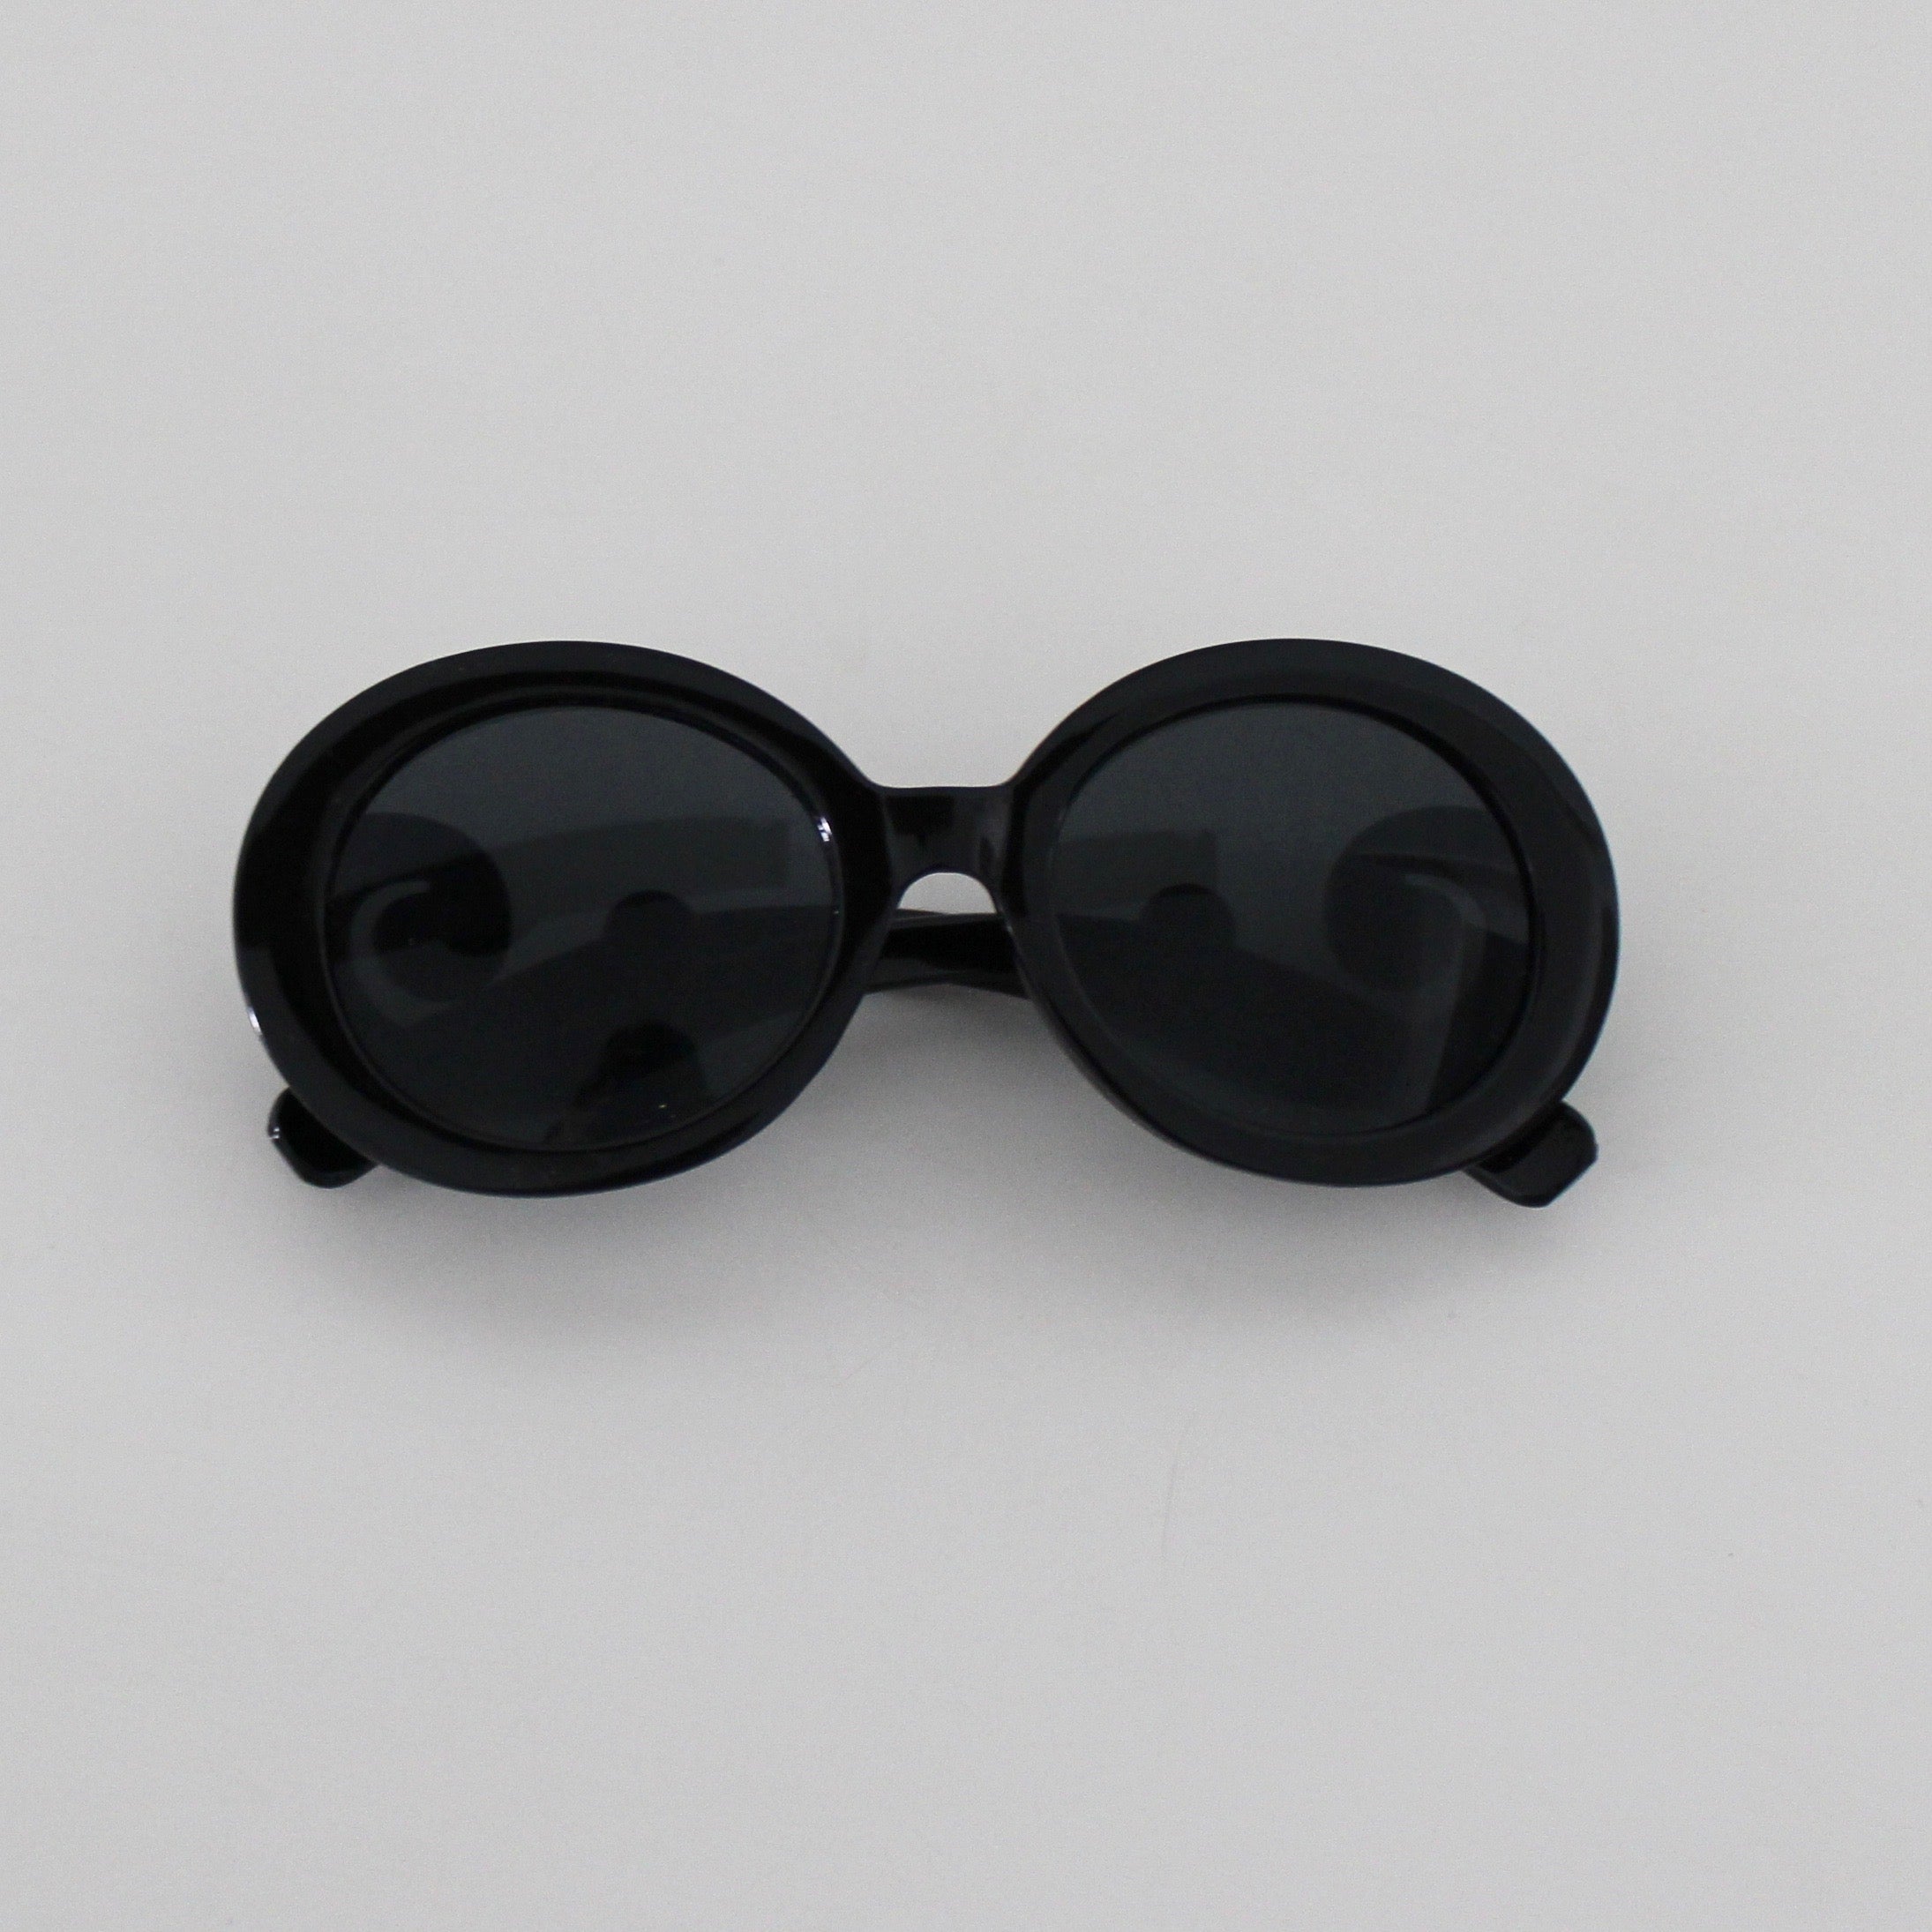 Unique Round Glasses for Girls